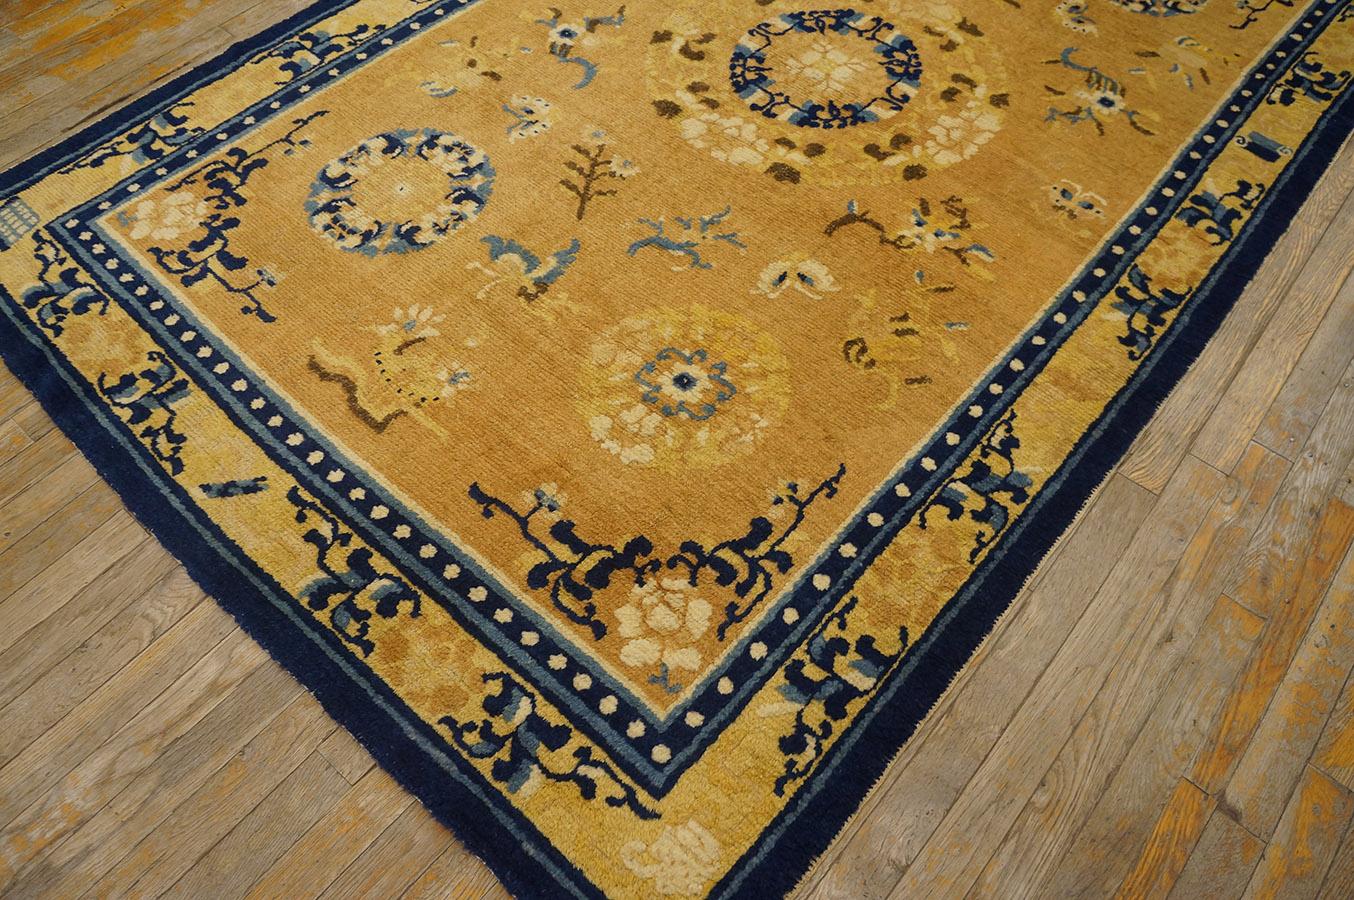 5 by 8 carpet in cm